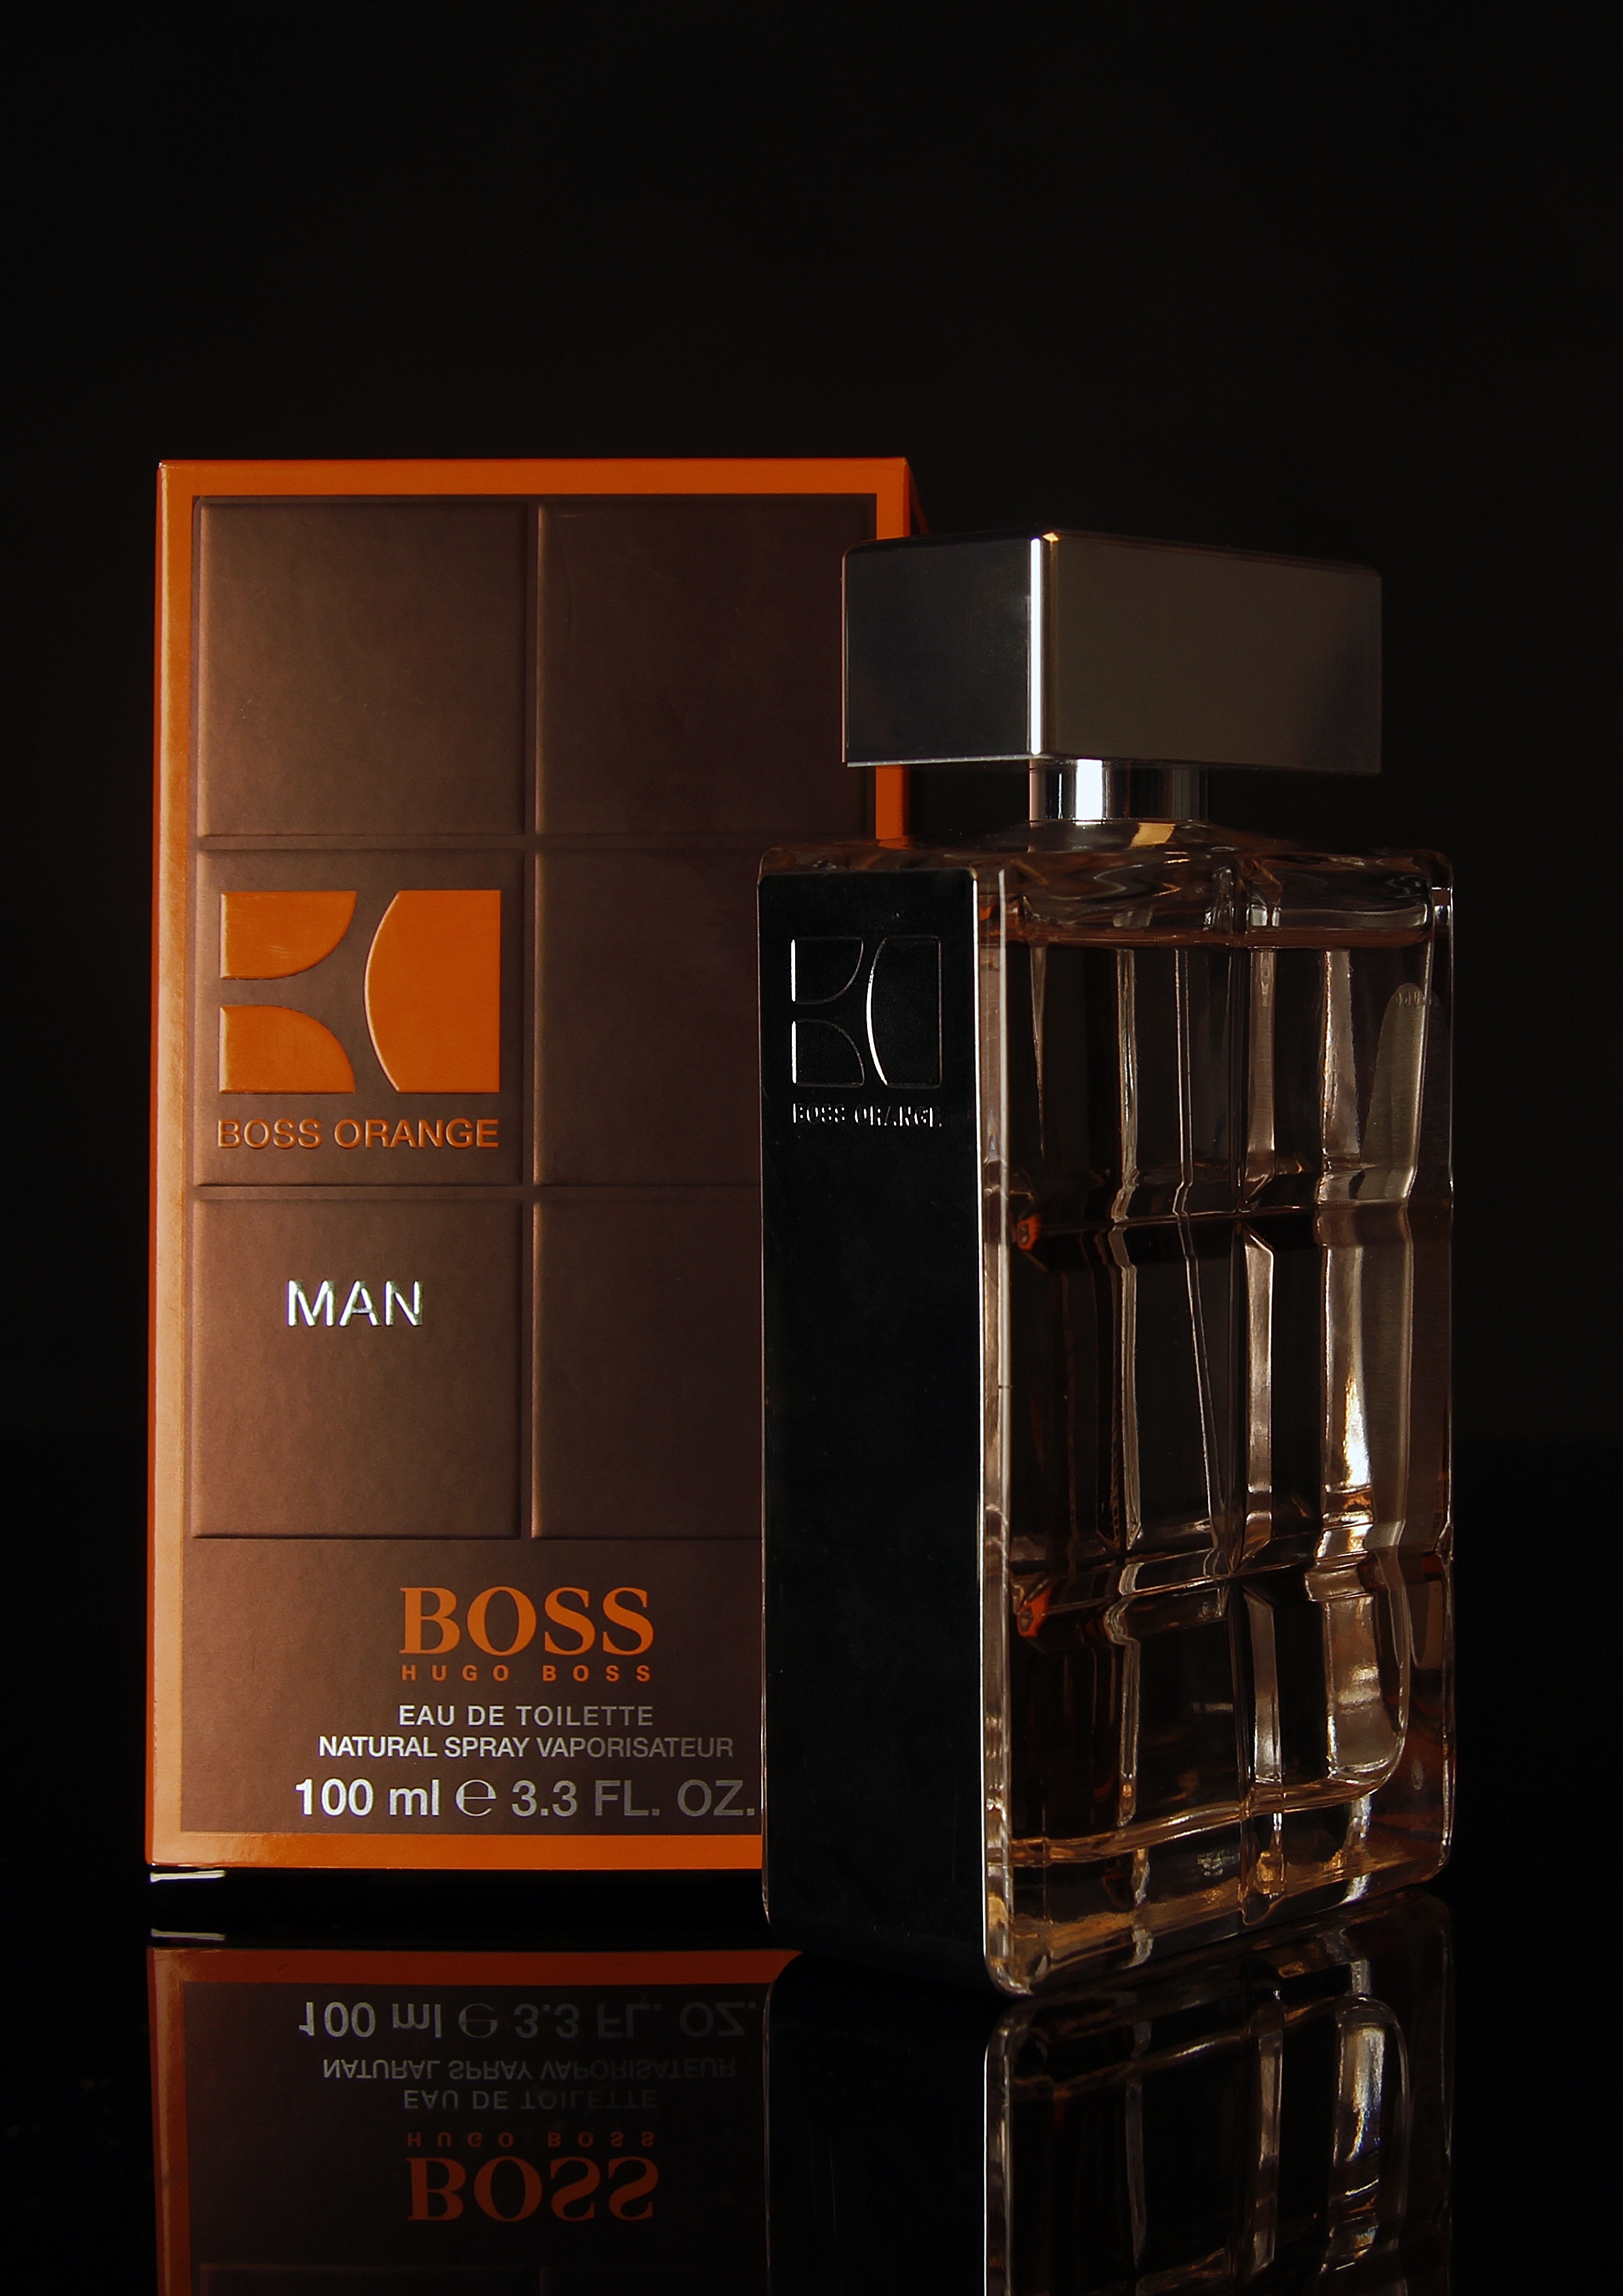 boss hugo boss eau de toilette 100 ml e fragrance bottle with box